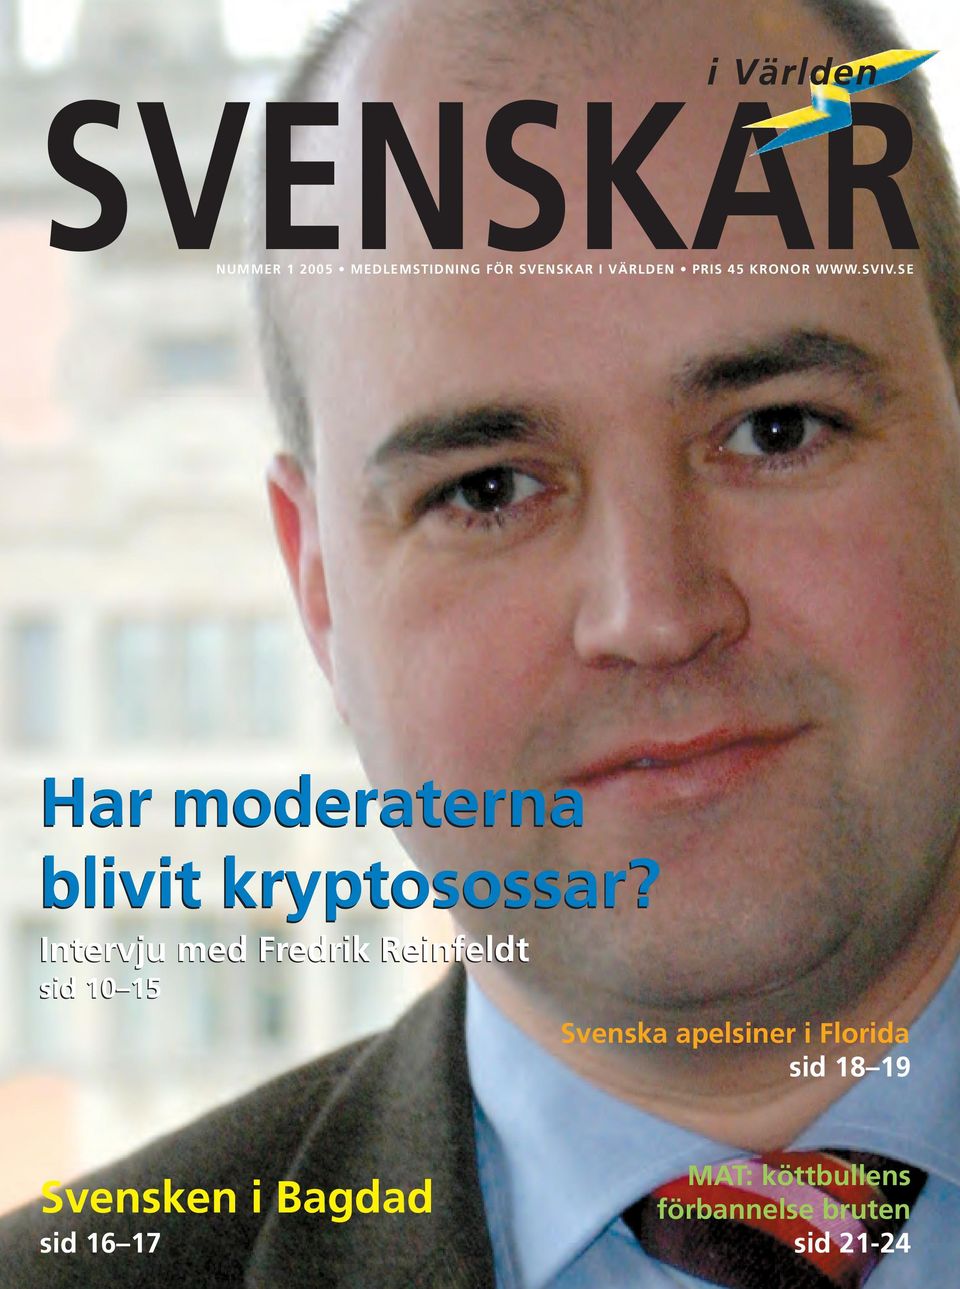 Intervju med Fredrik Reinfeldt sid 10 15 Svenska apelsiner i Florida sid